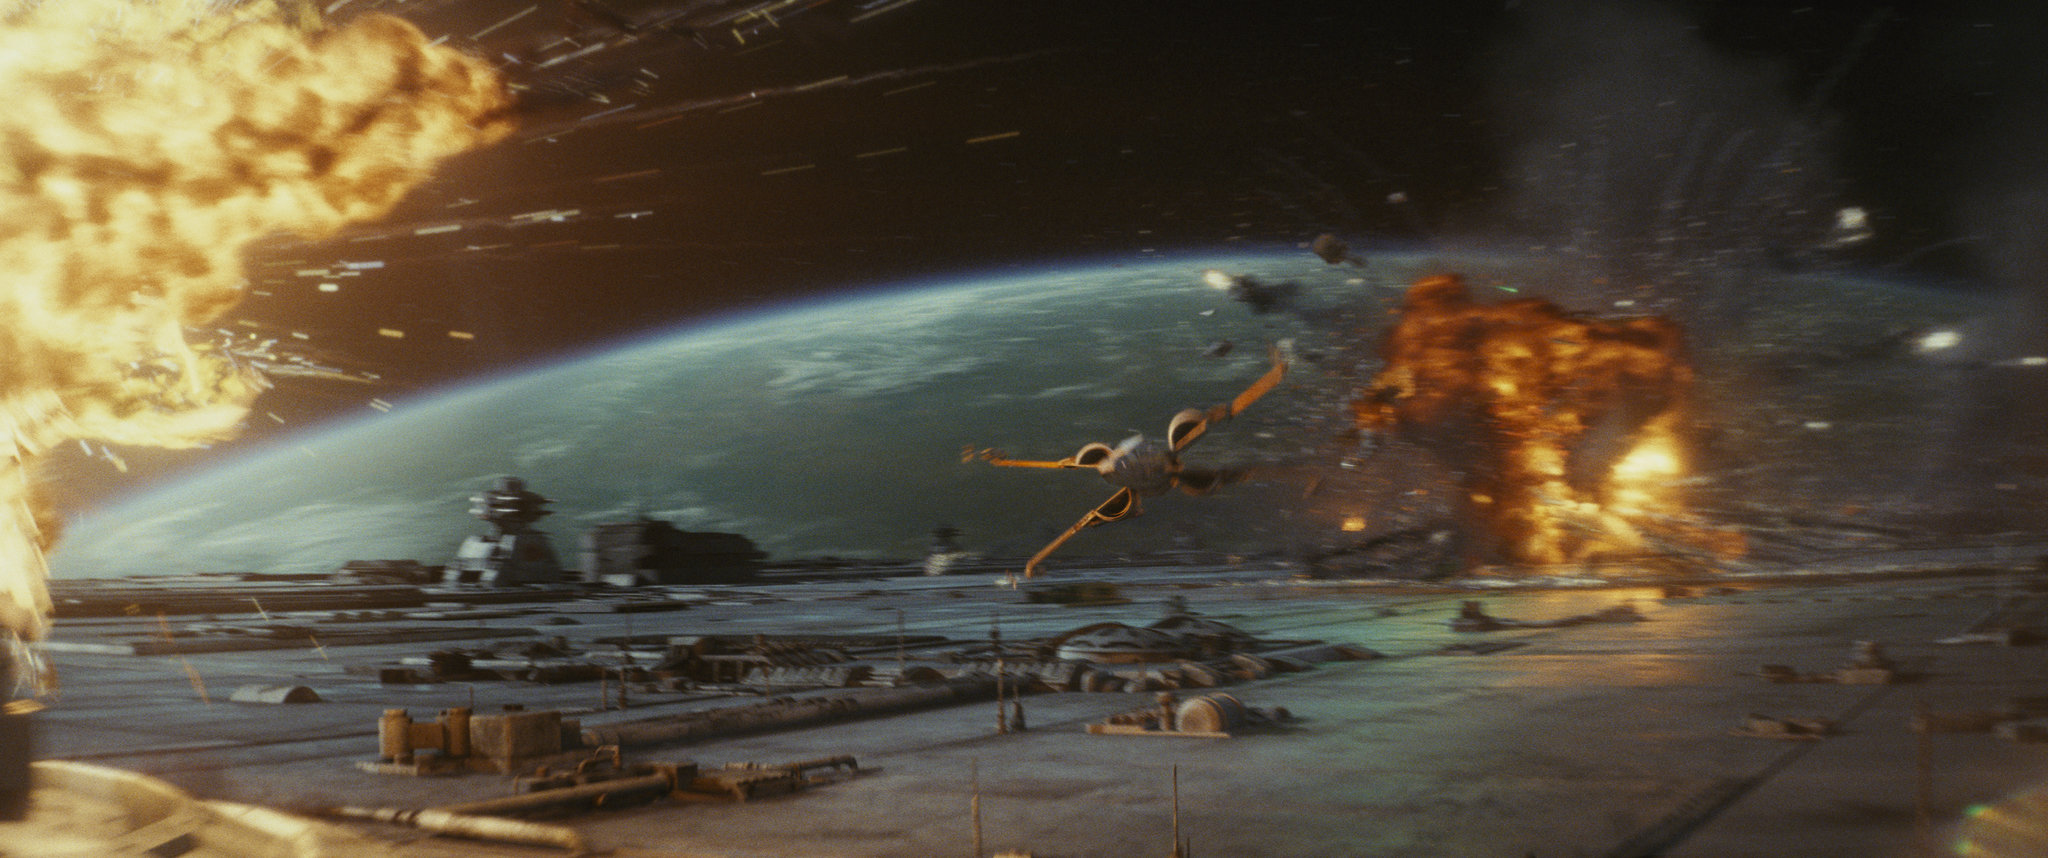 Звёздные войны: Последние джедаи, кадр № 46